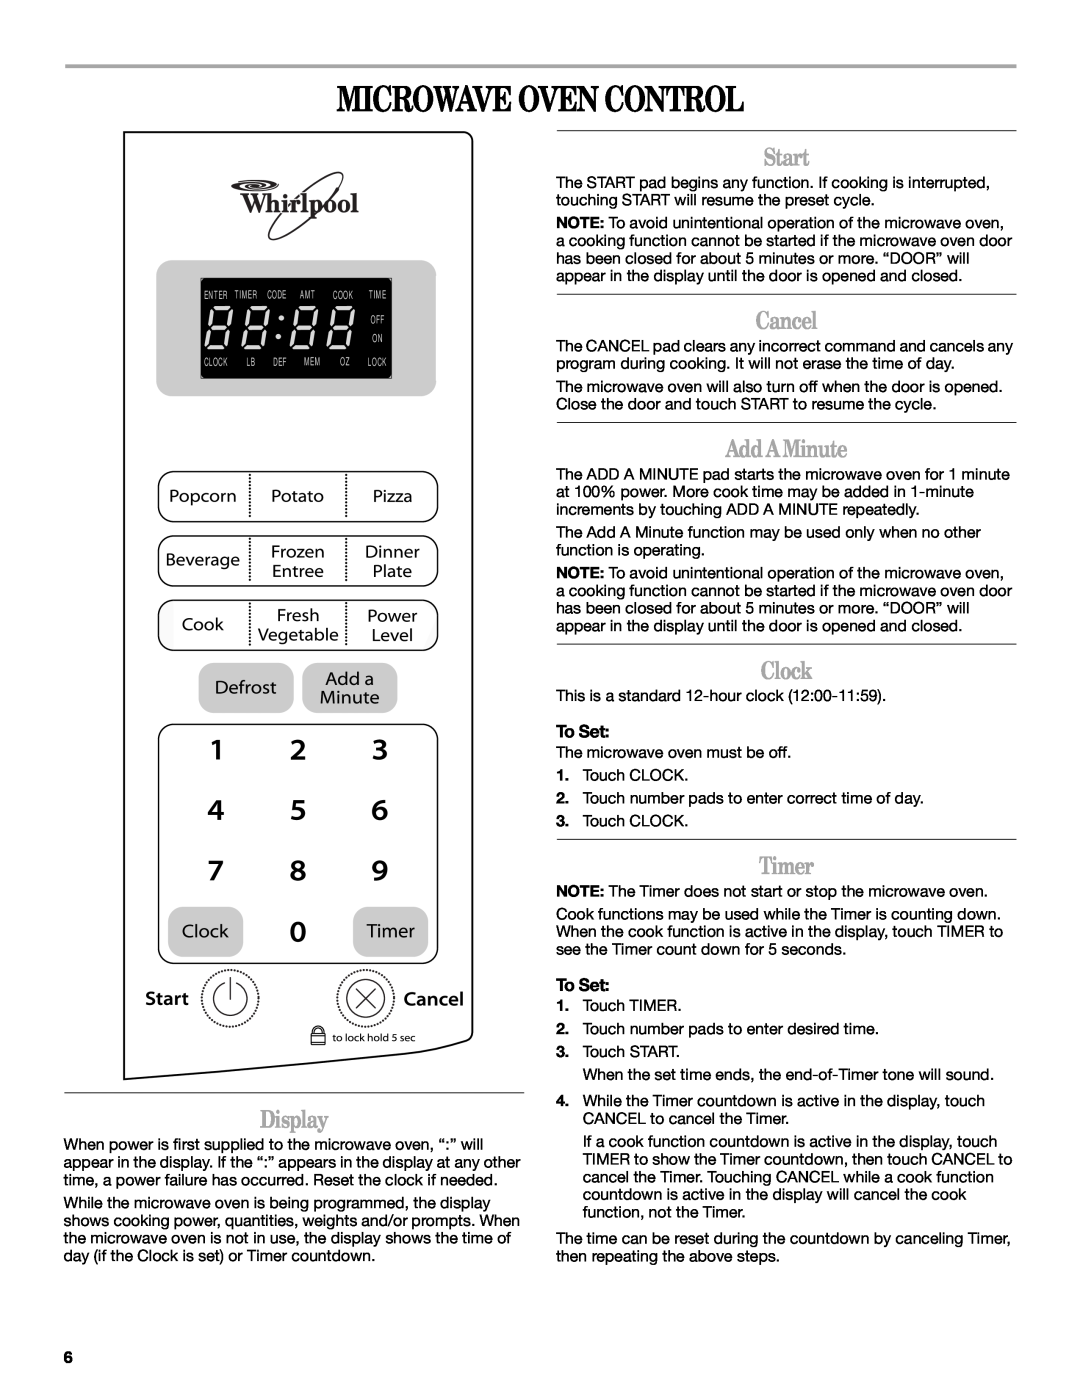 Whirlpool WMC1070 manual Microwave Oven Control, Display, Start, Cancel, AddAMinute, Clock, Timer 